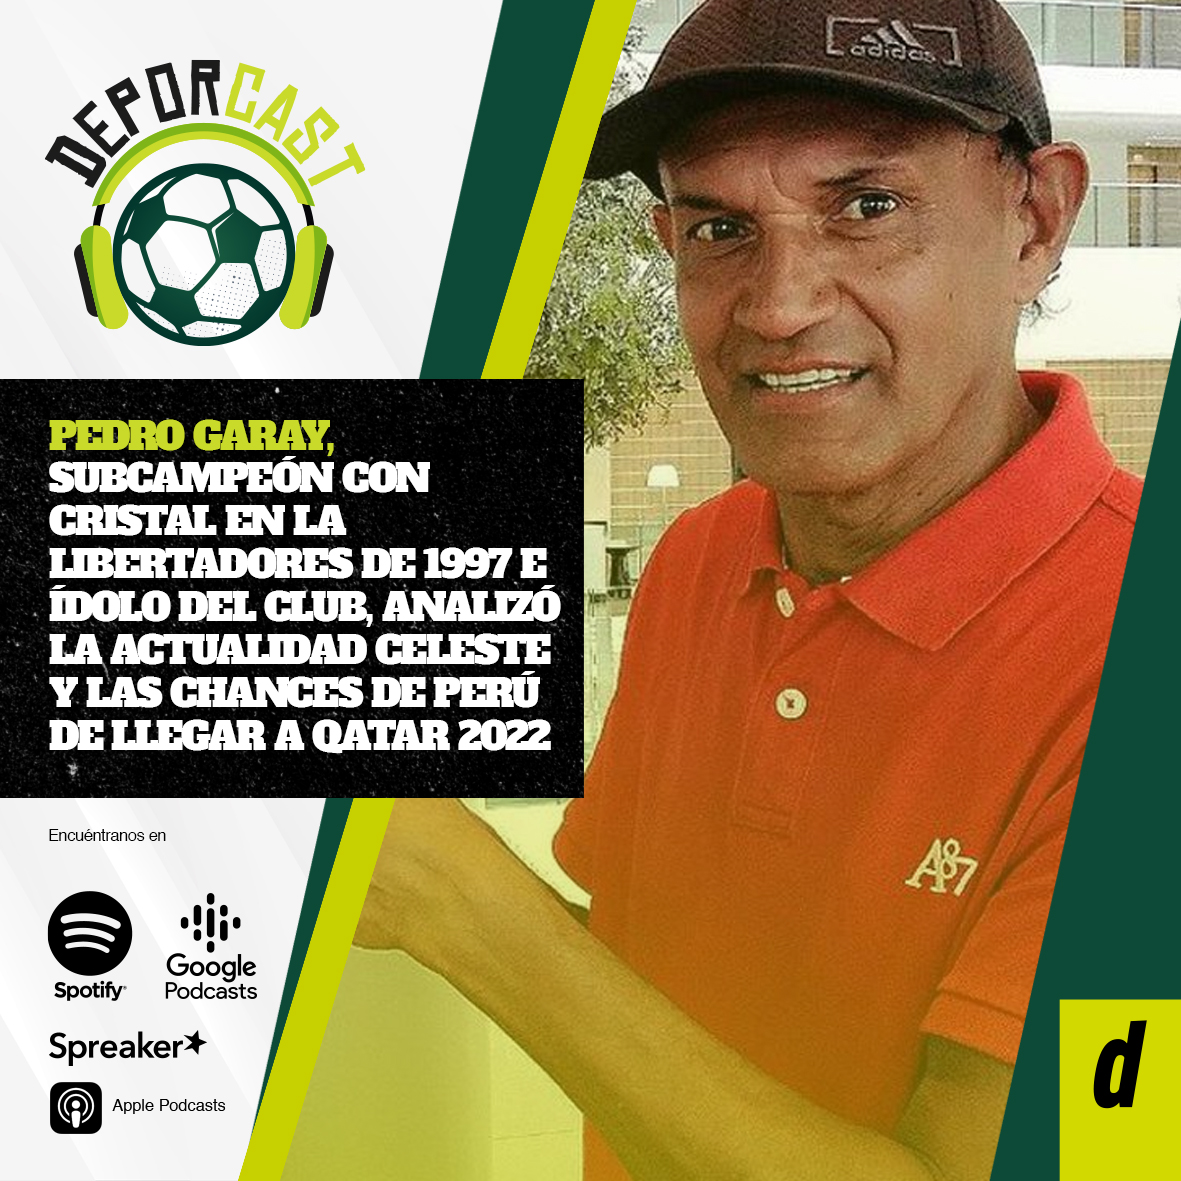 Pedro Garay, subcampeón de la Libertadores de 1997 con Cristal: "Se necesita contratar jugadores que sean útiles a nivel internacional"